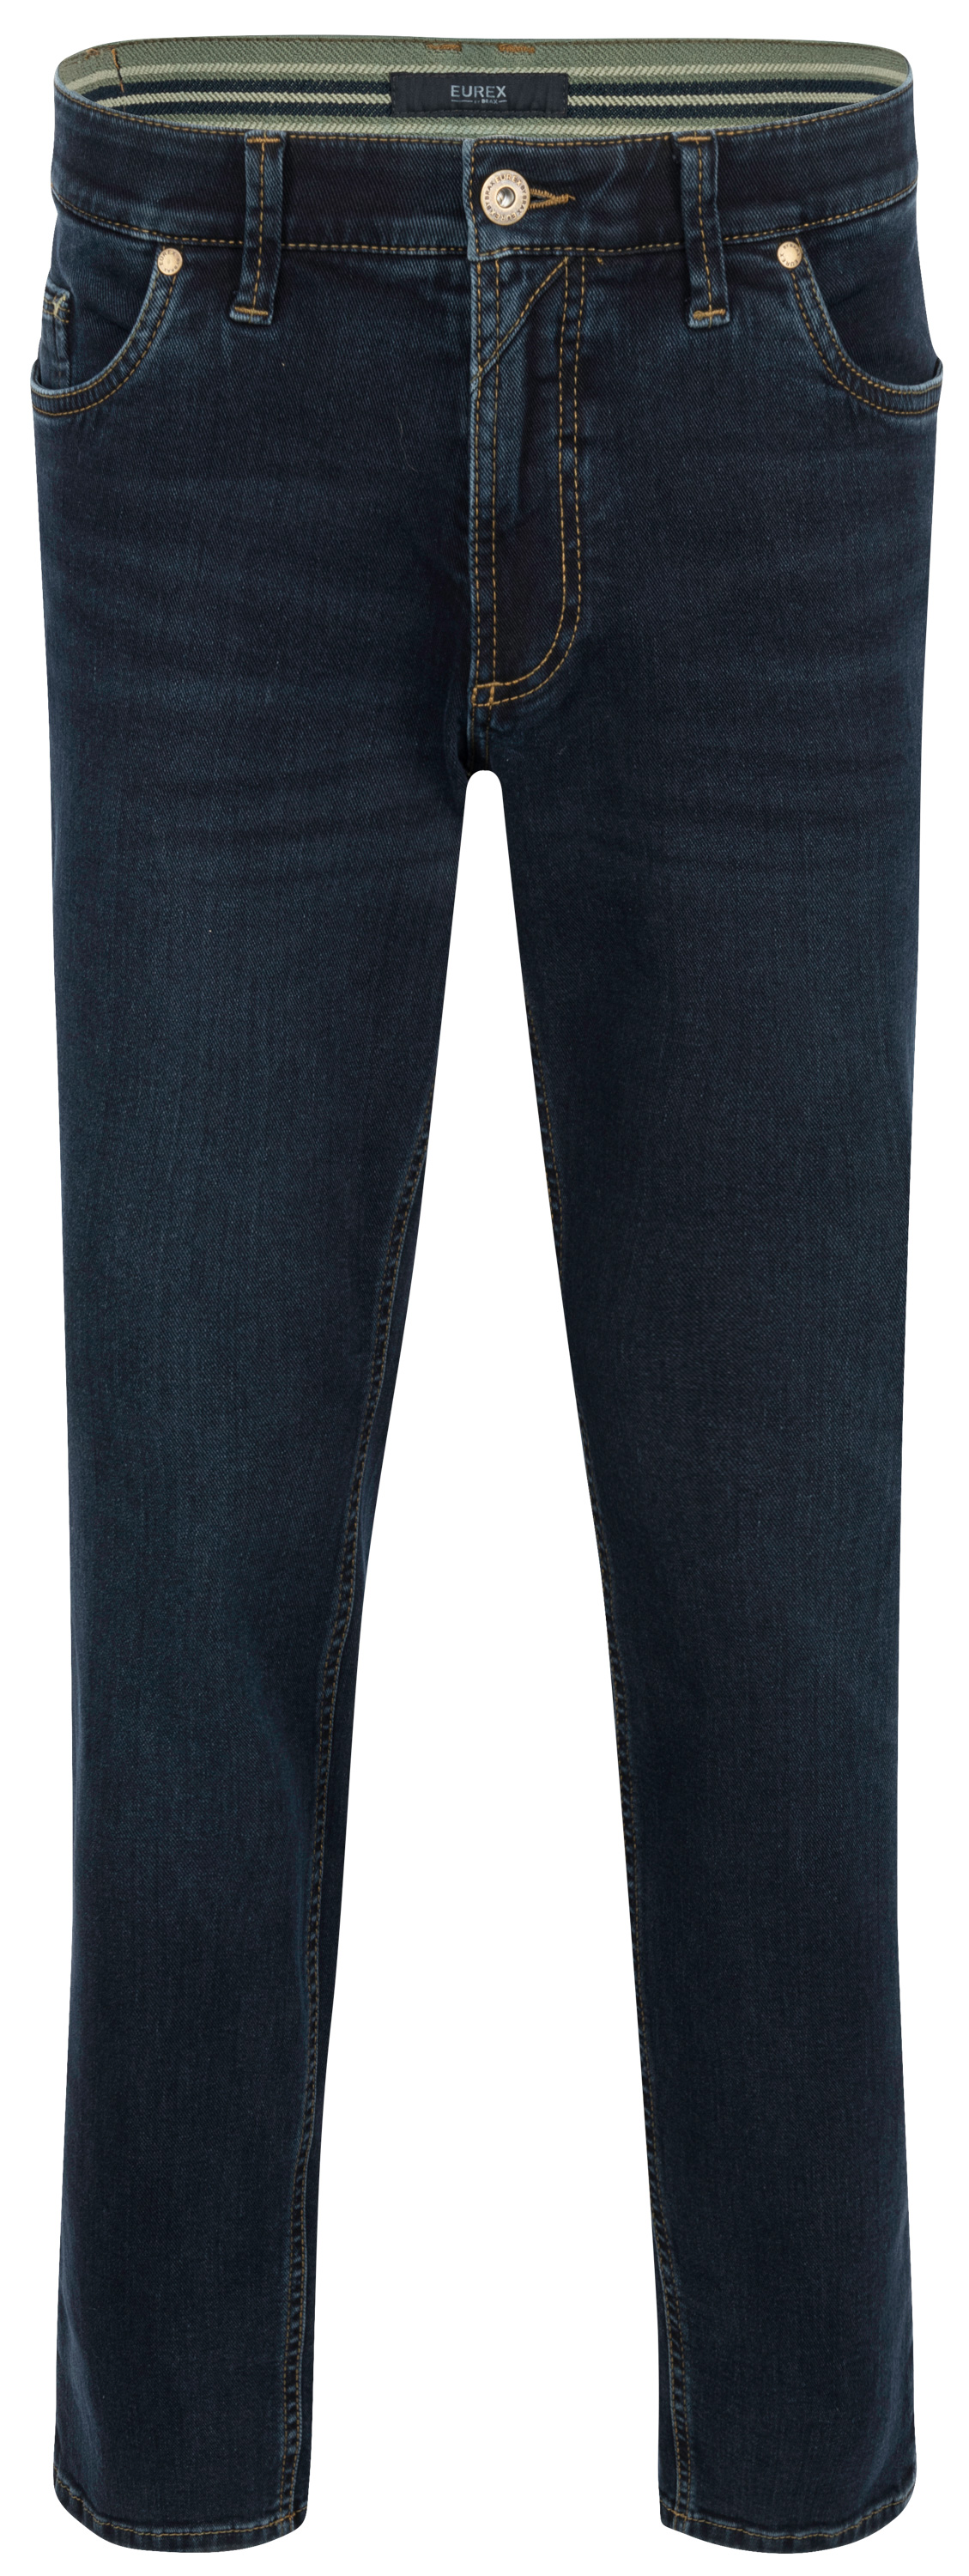 BRAX | Männer blau BY Jeans 51-6267-24 | DENIM | Jeans-Manufaktur LUKE EUREX Brax Luke | 5939020 DENIM POWER Jeans POWER | - EUREX